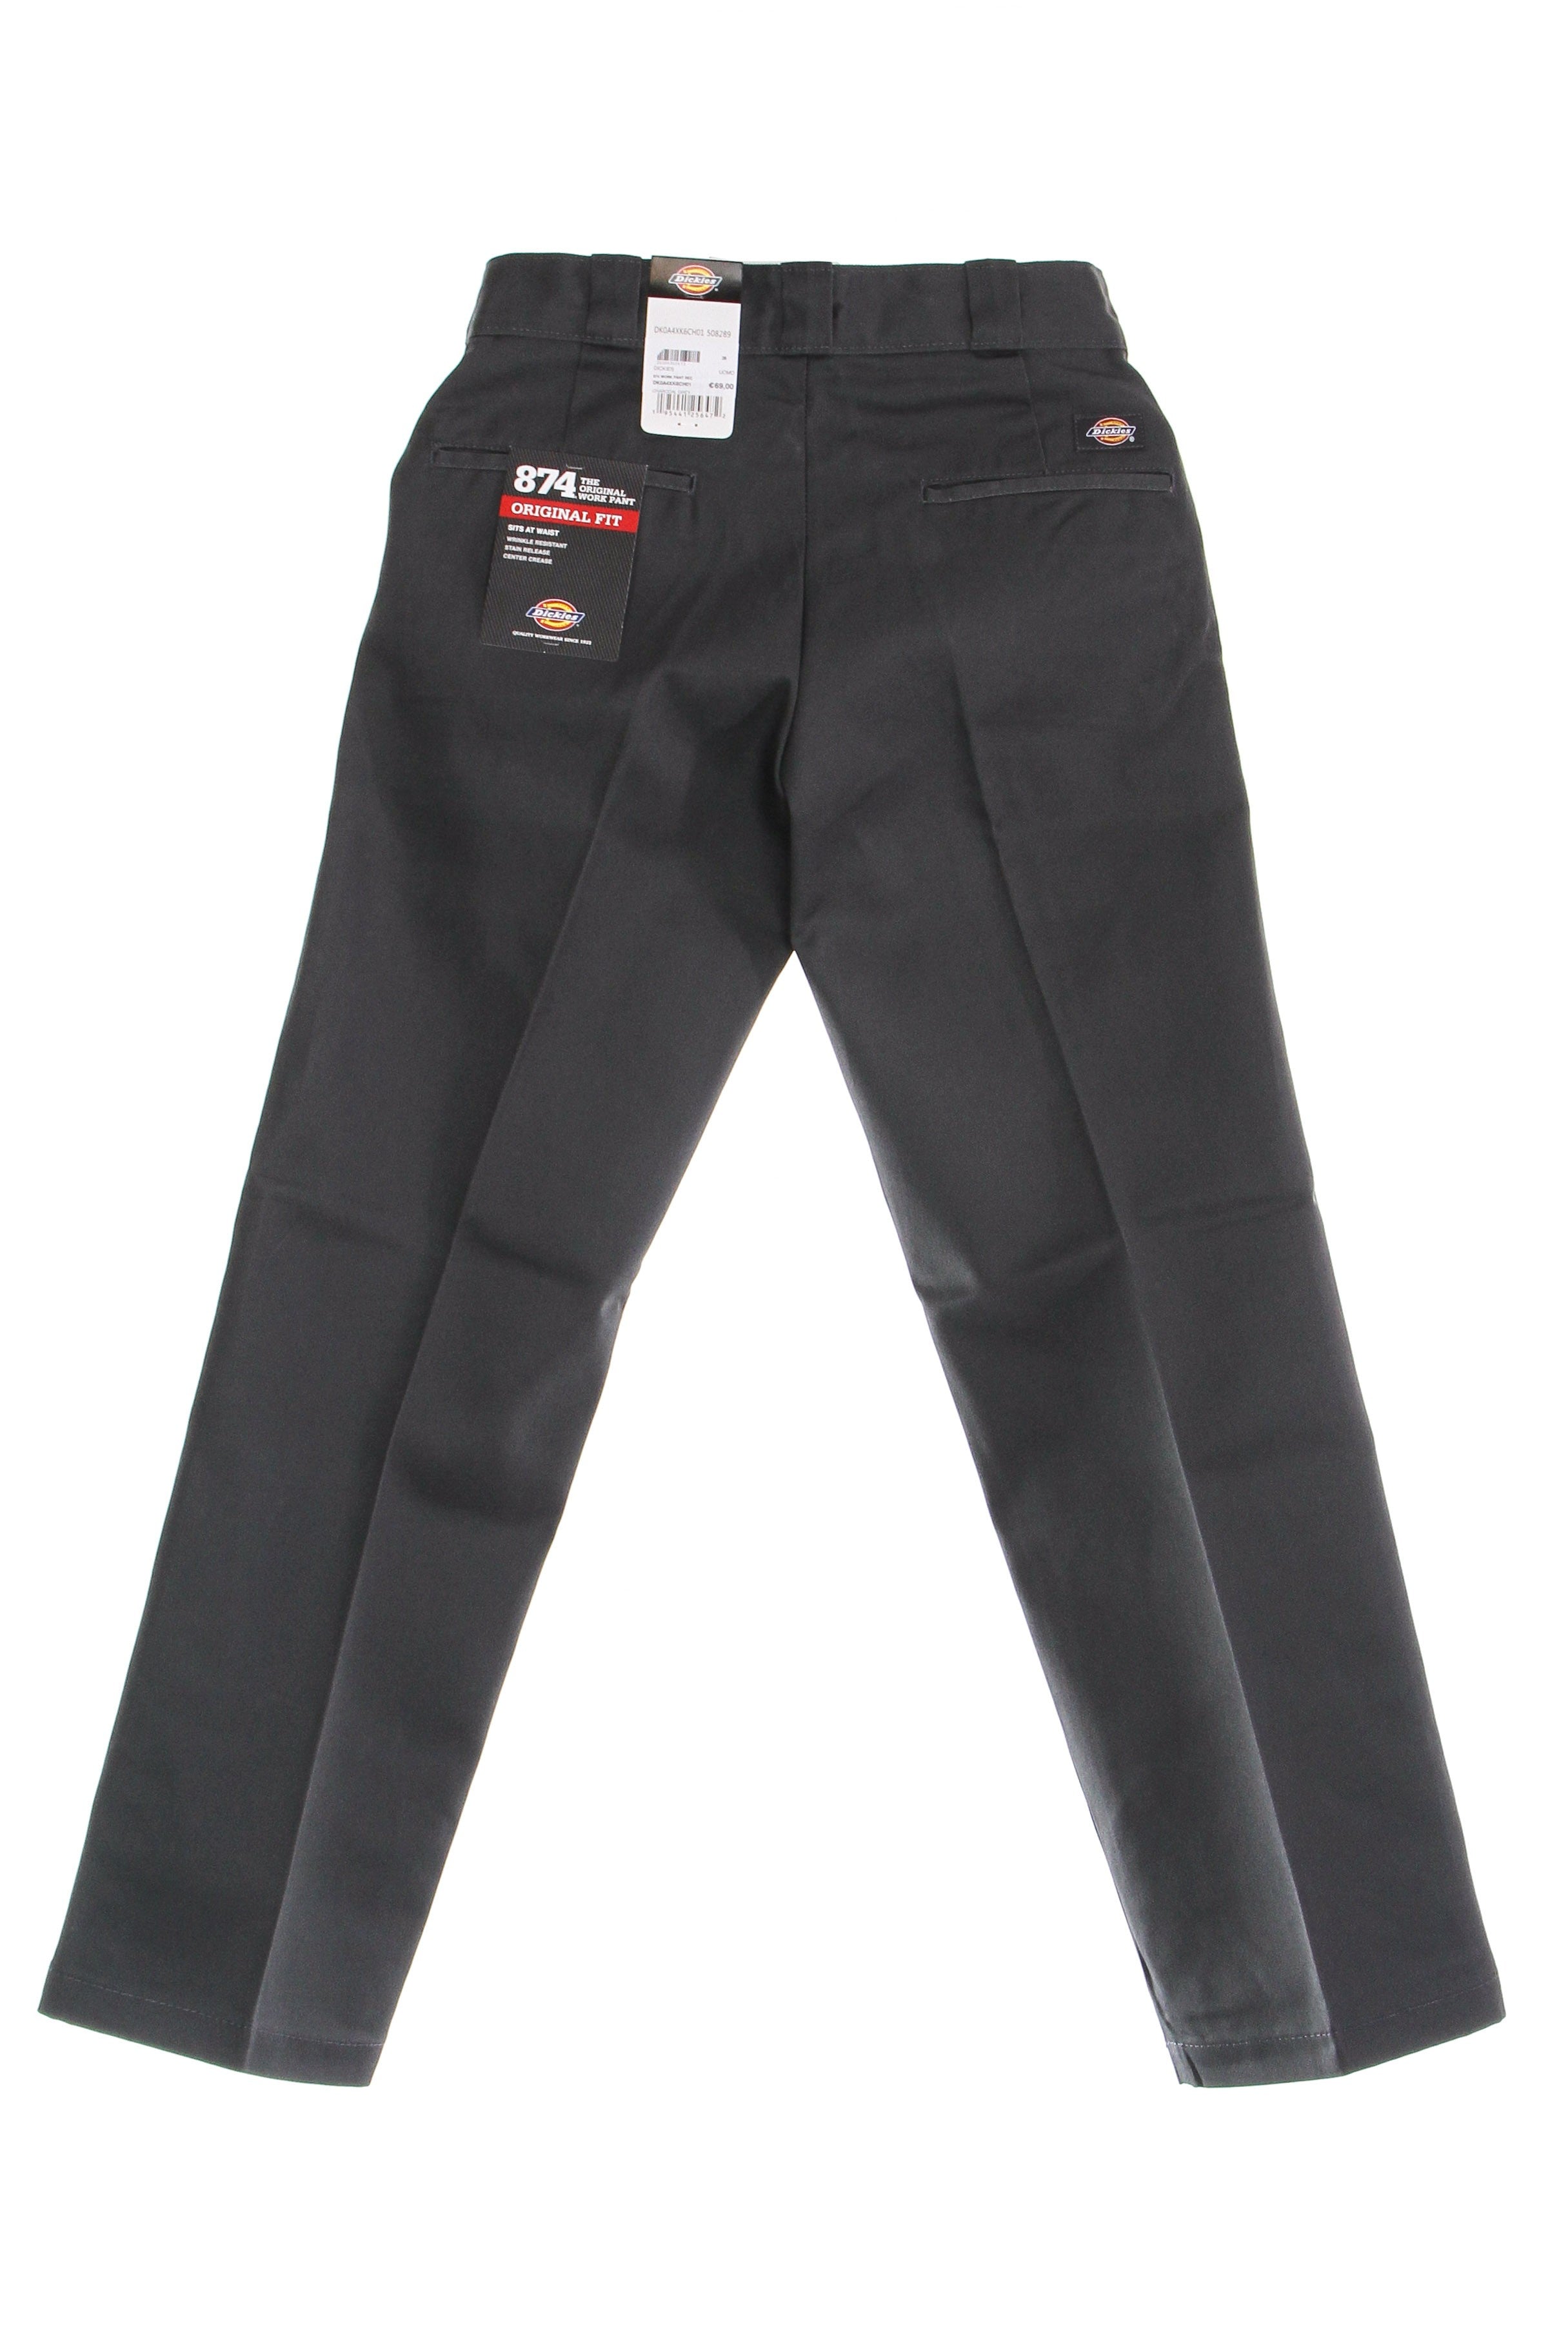 Pantalone Lungo Uomo 874 Work Pant Rec Charcoal Grey